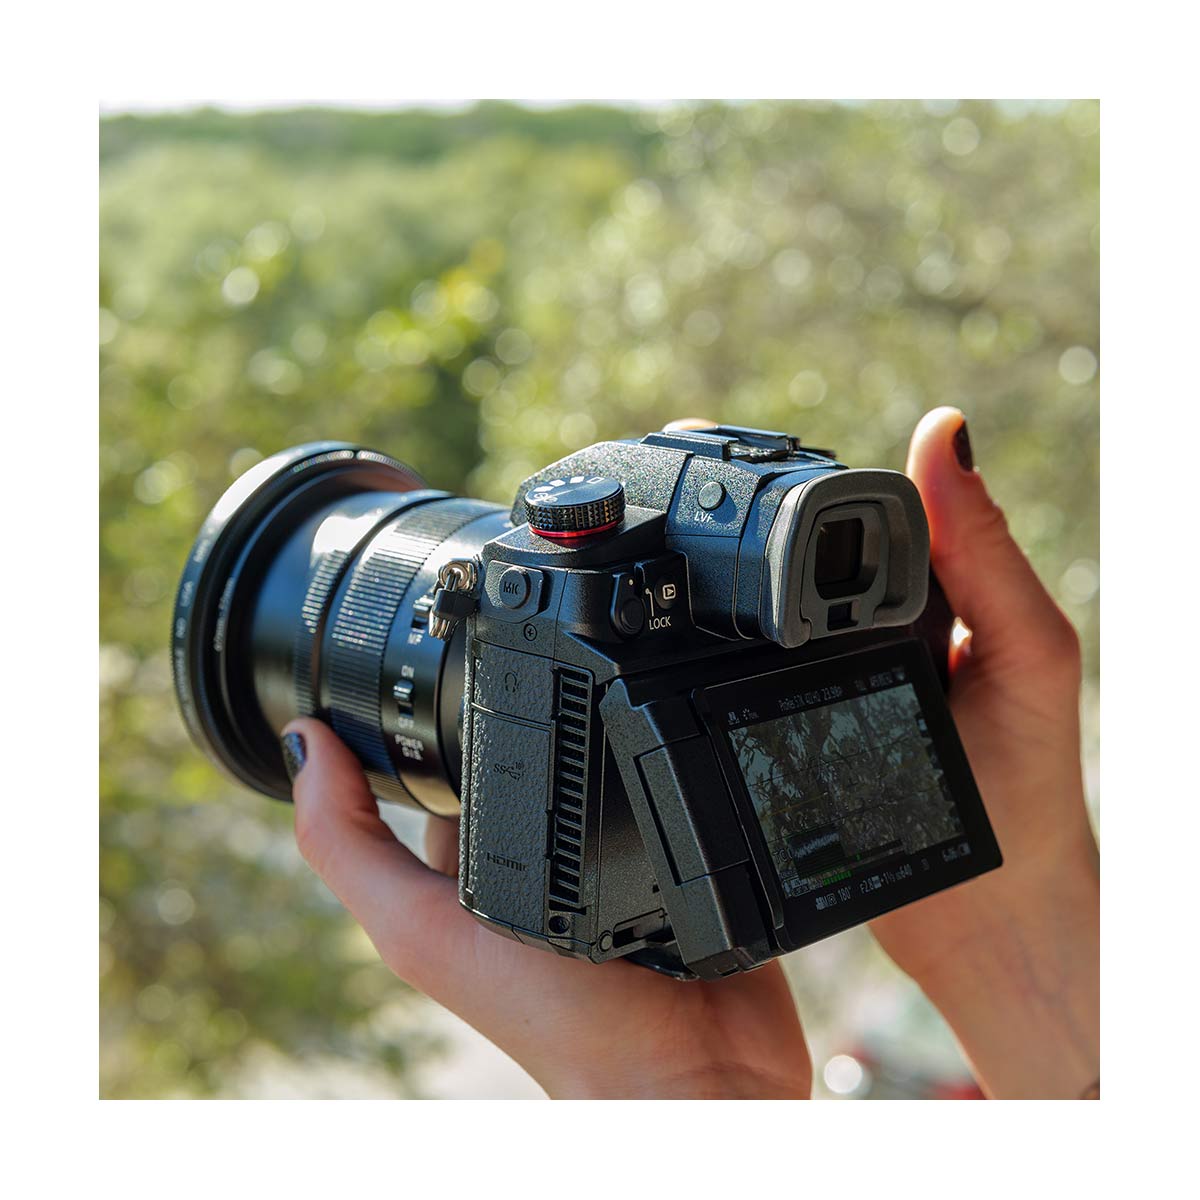 Panasonic Lumix GH6 Mirrorless Camera with Leica 12-60mm Lens Kit